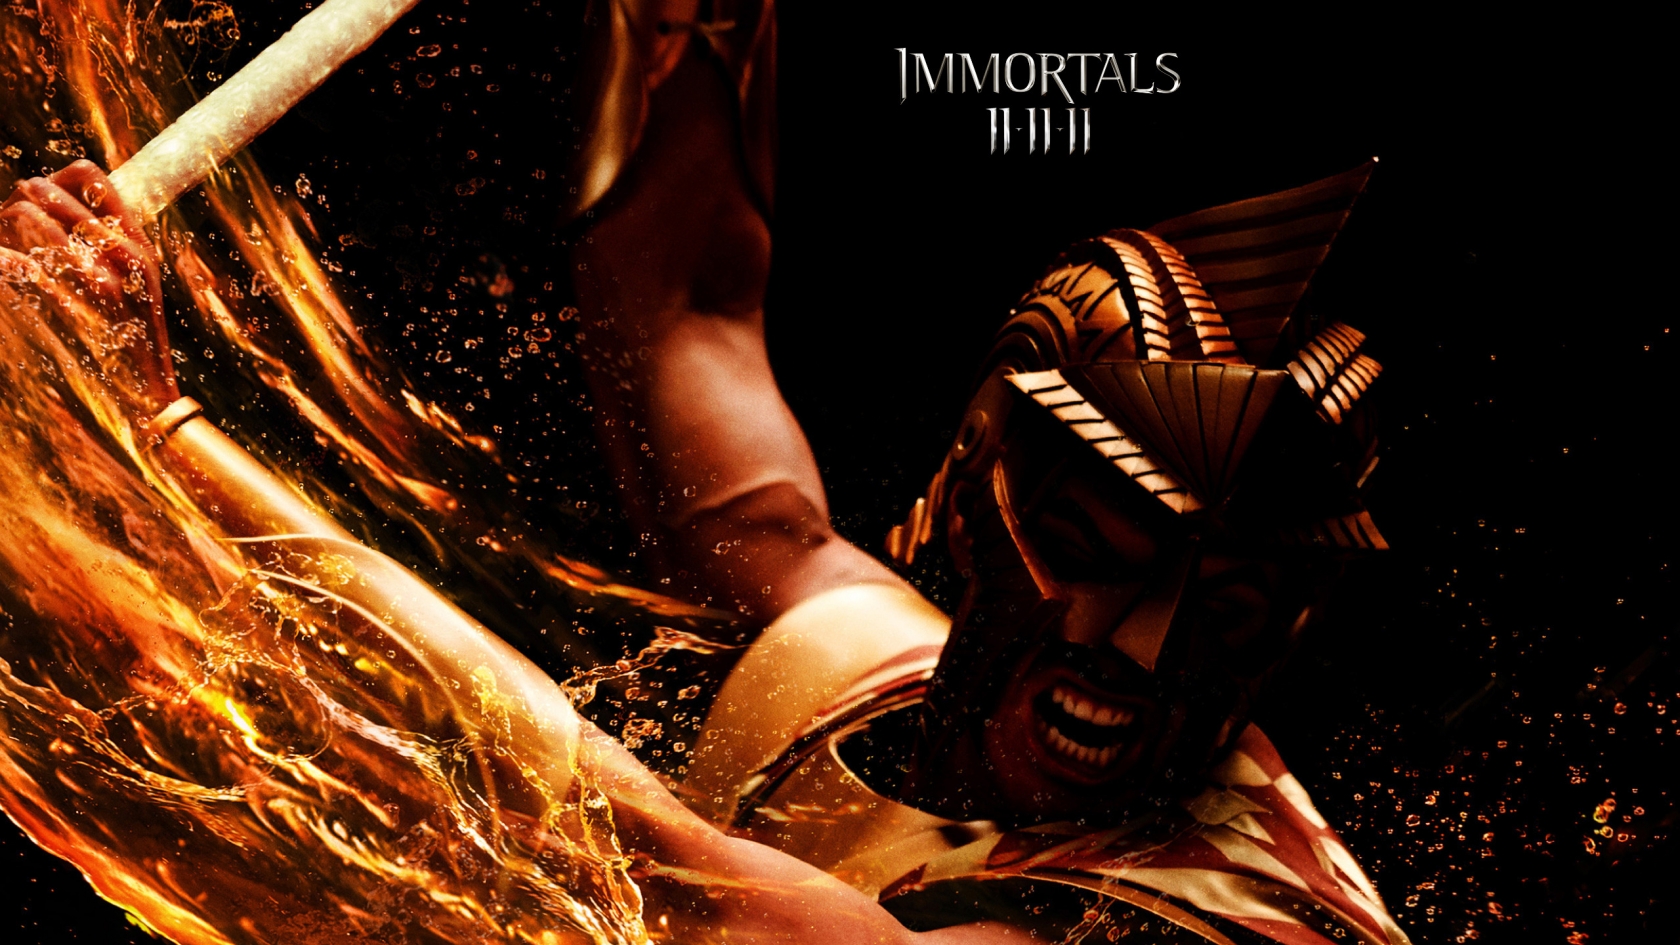 Immortals 2011 Movie for 1680 x 945 HDTV resolution